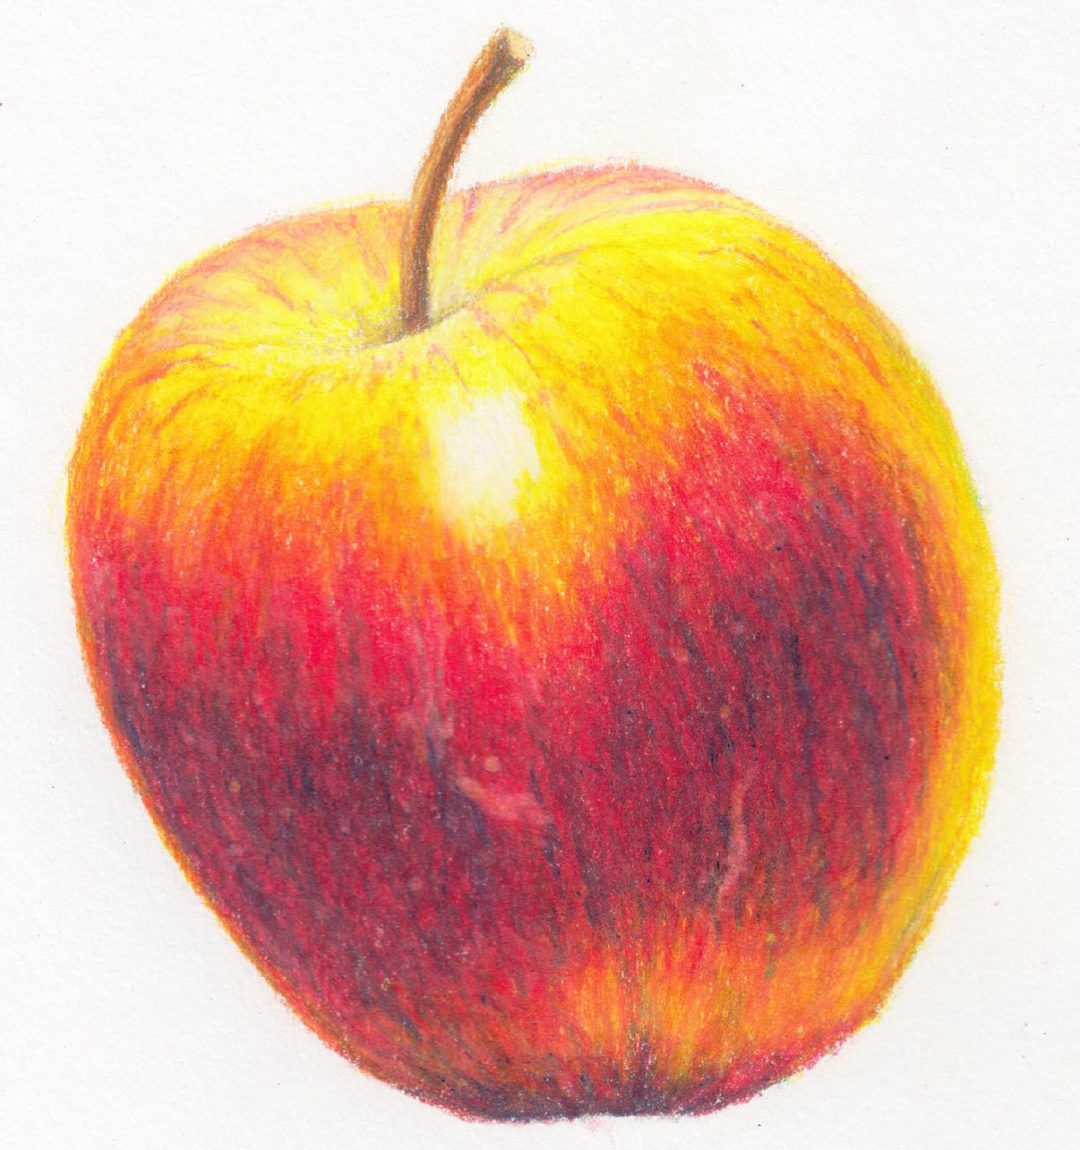 oterati apple sketch images